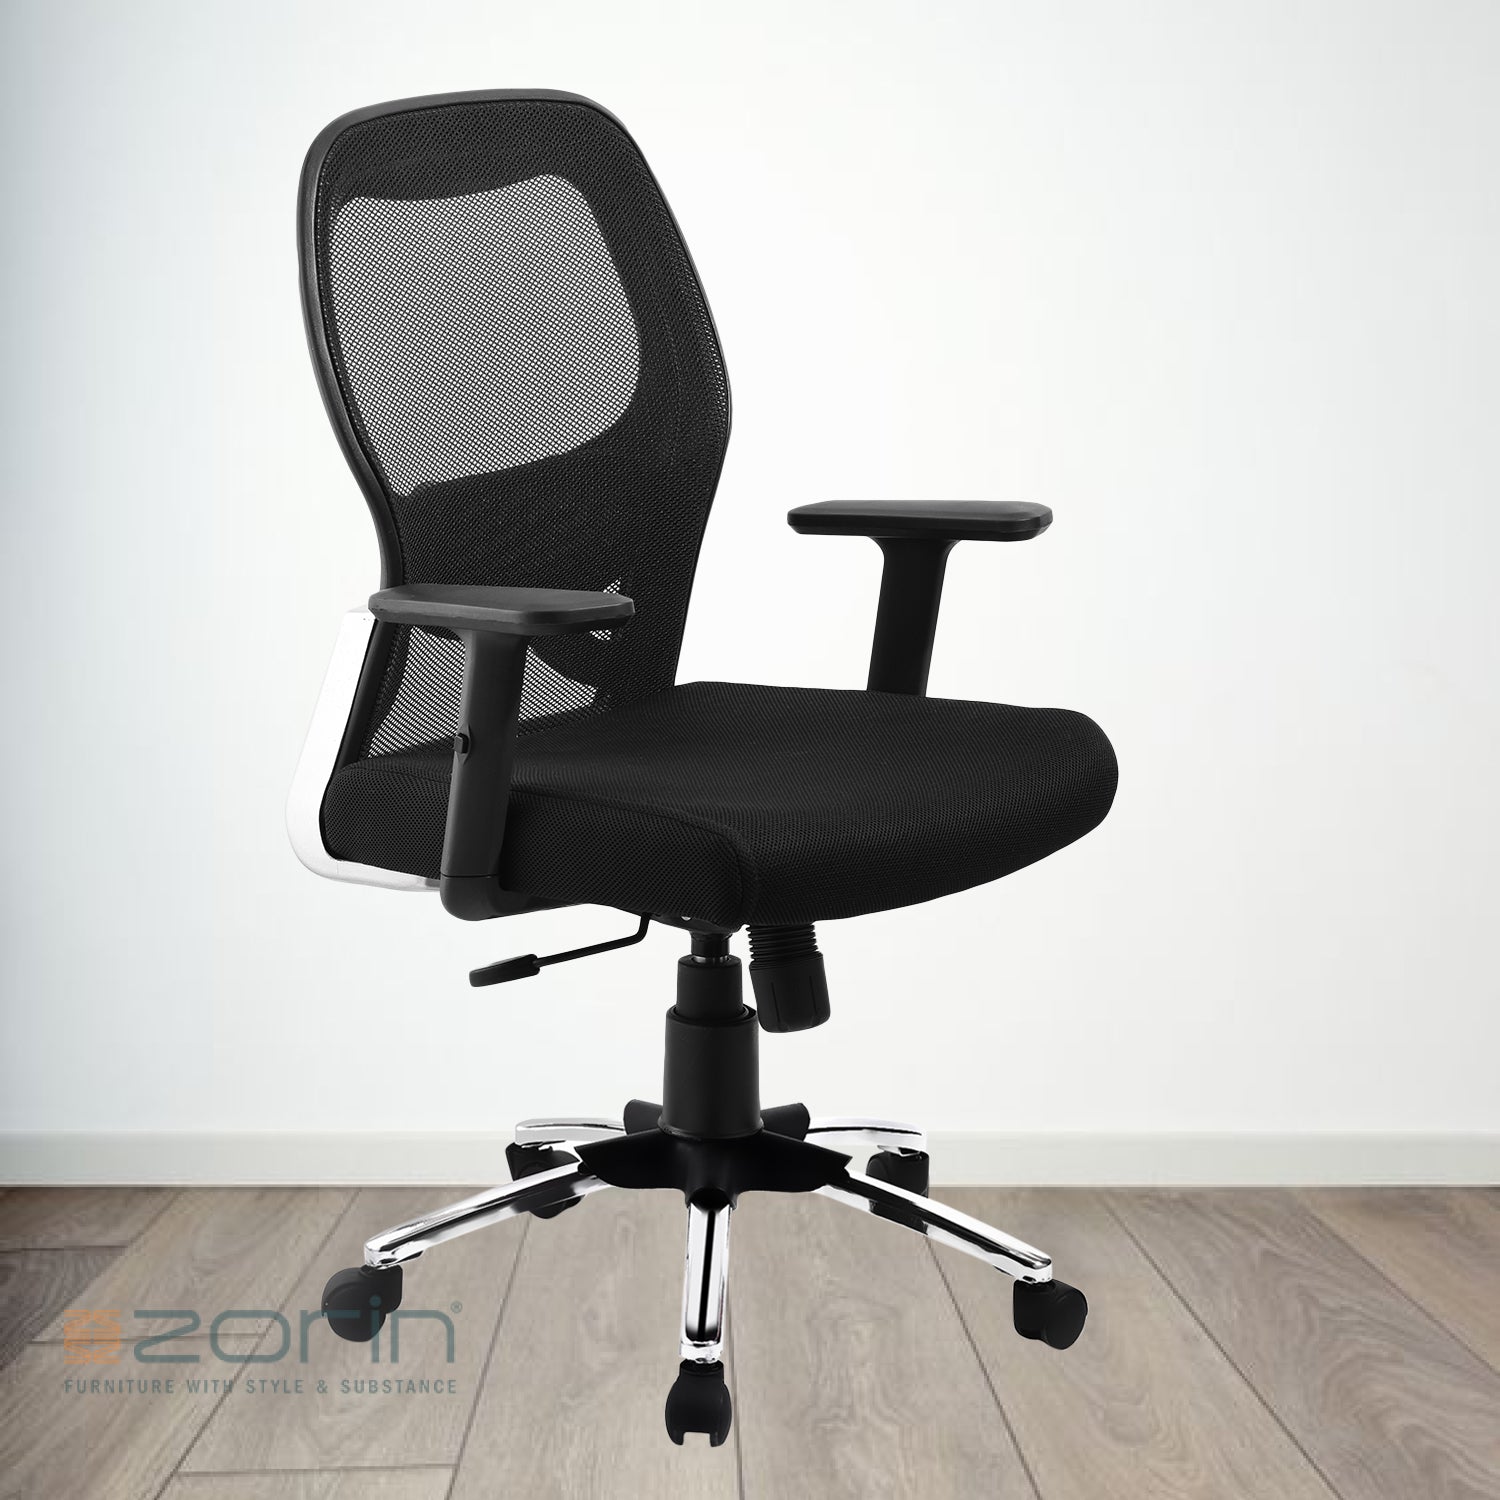 ZWS1049 Medium Back Chair by Zorin in Black Color Zorin